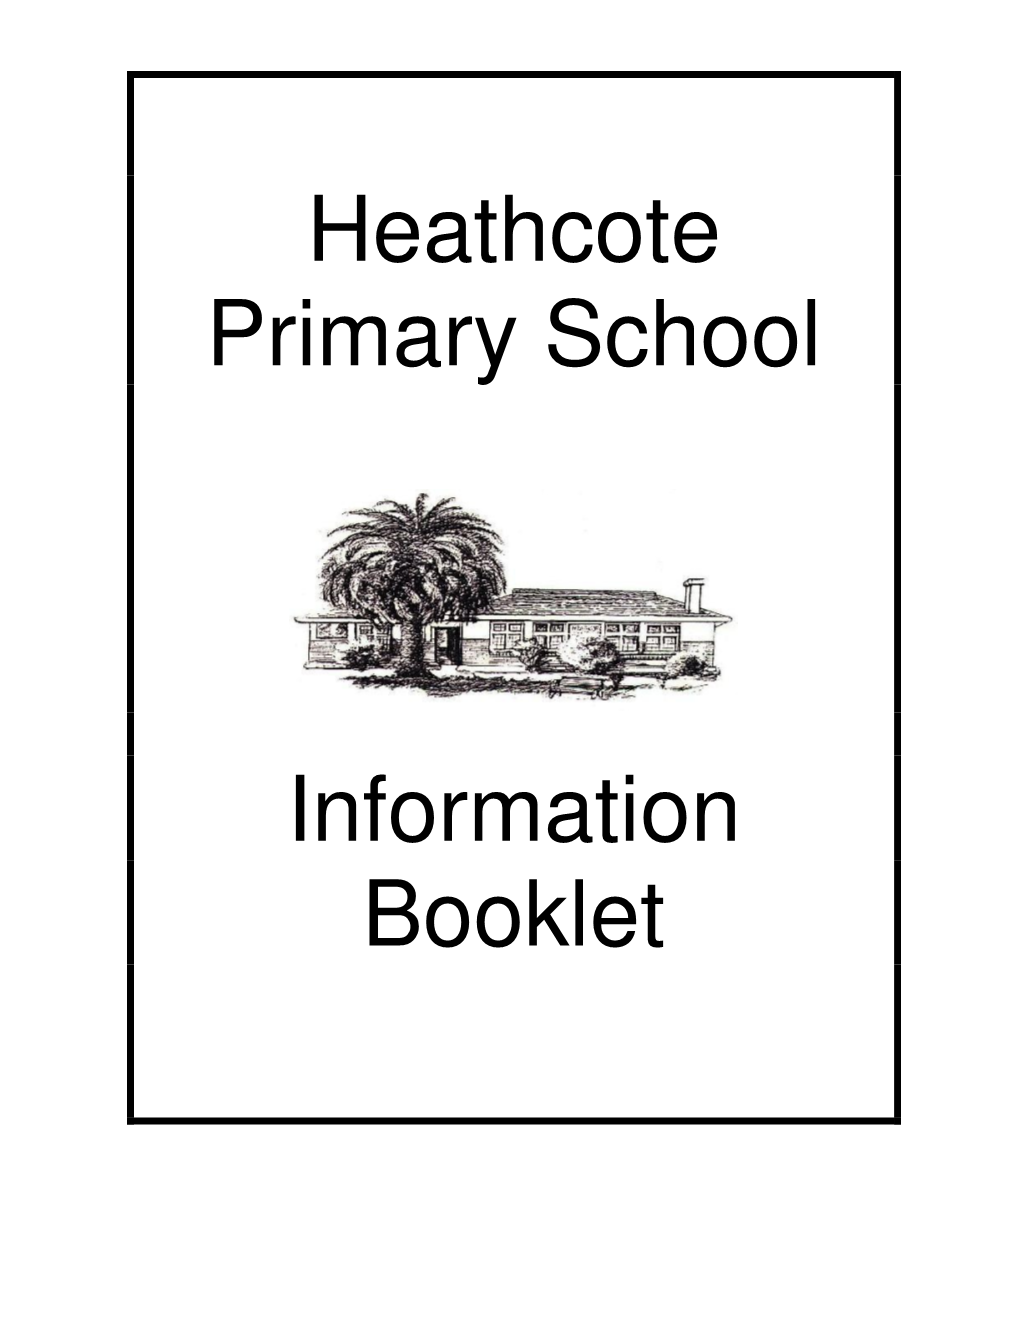 Heathcote Primary School Information Booklet